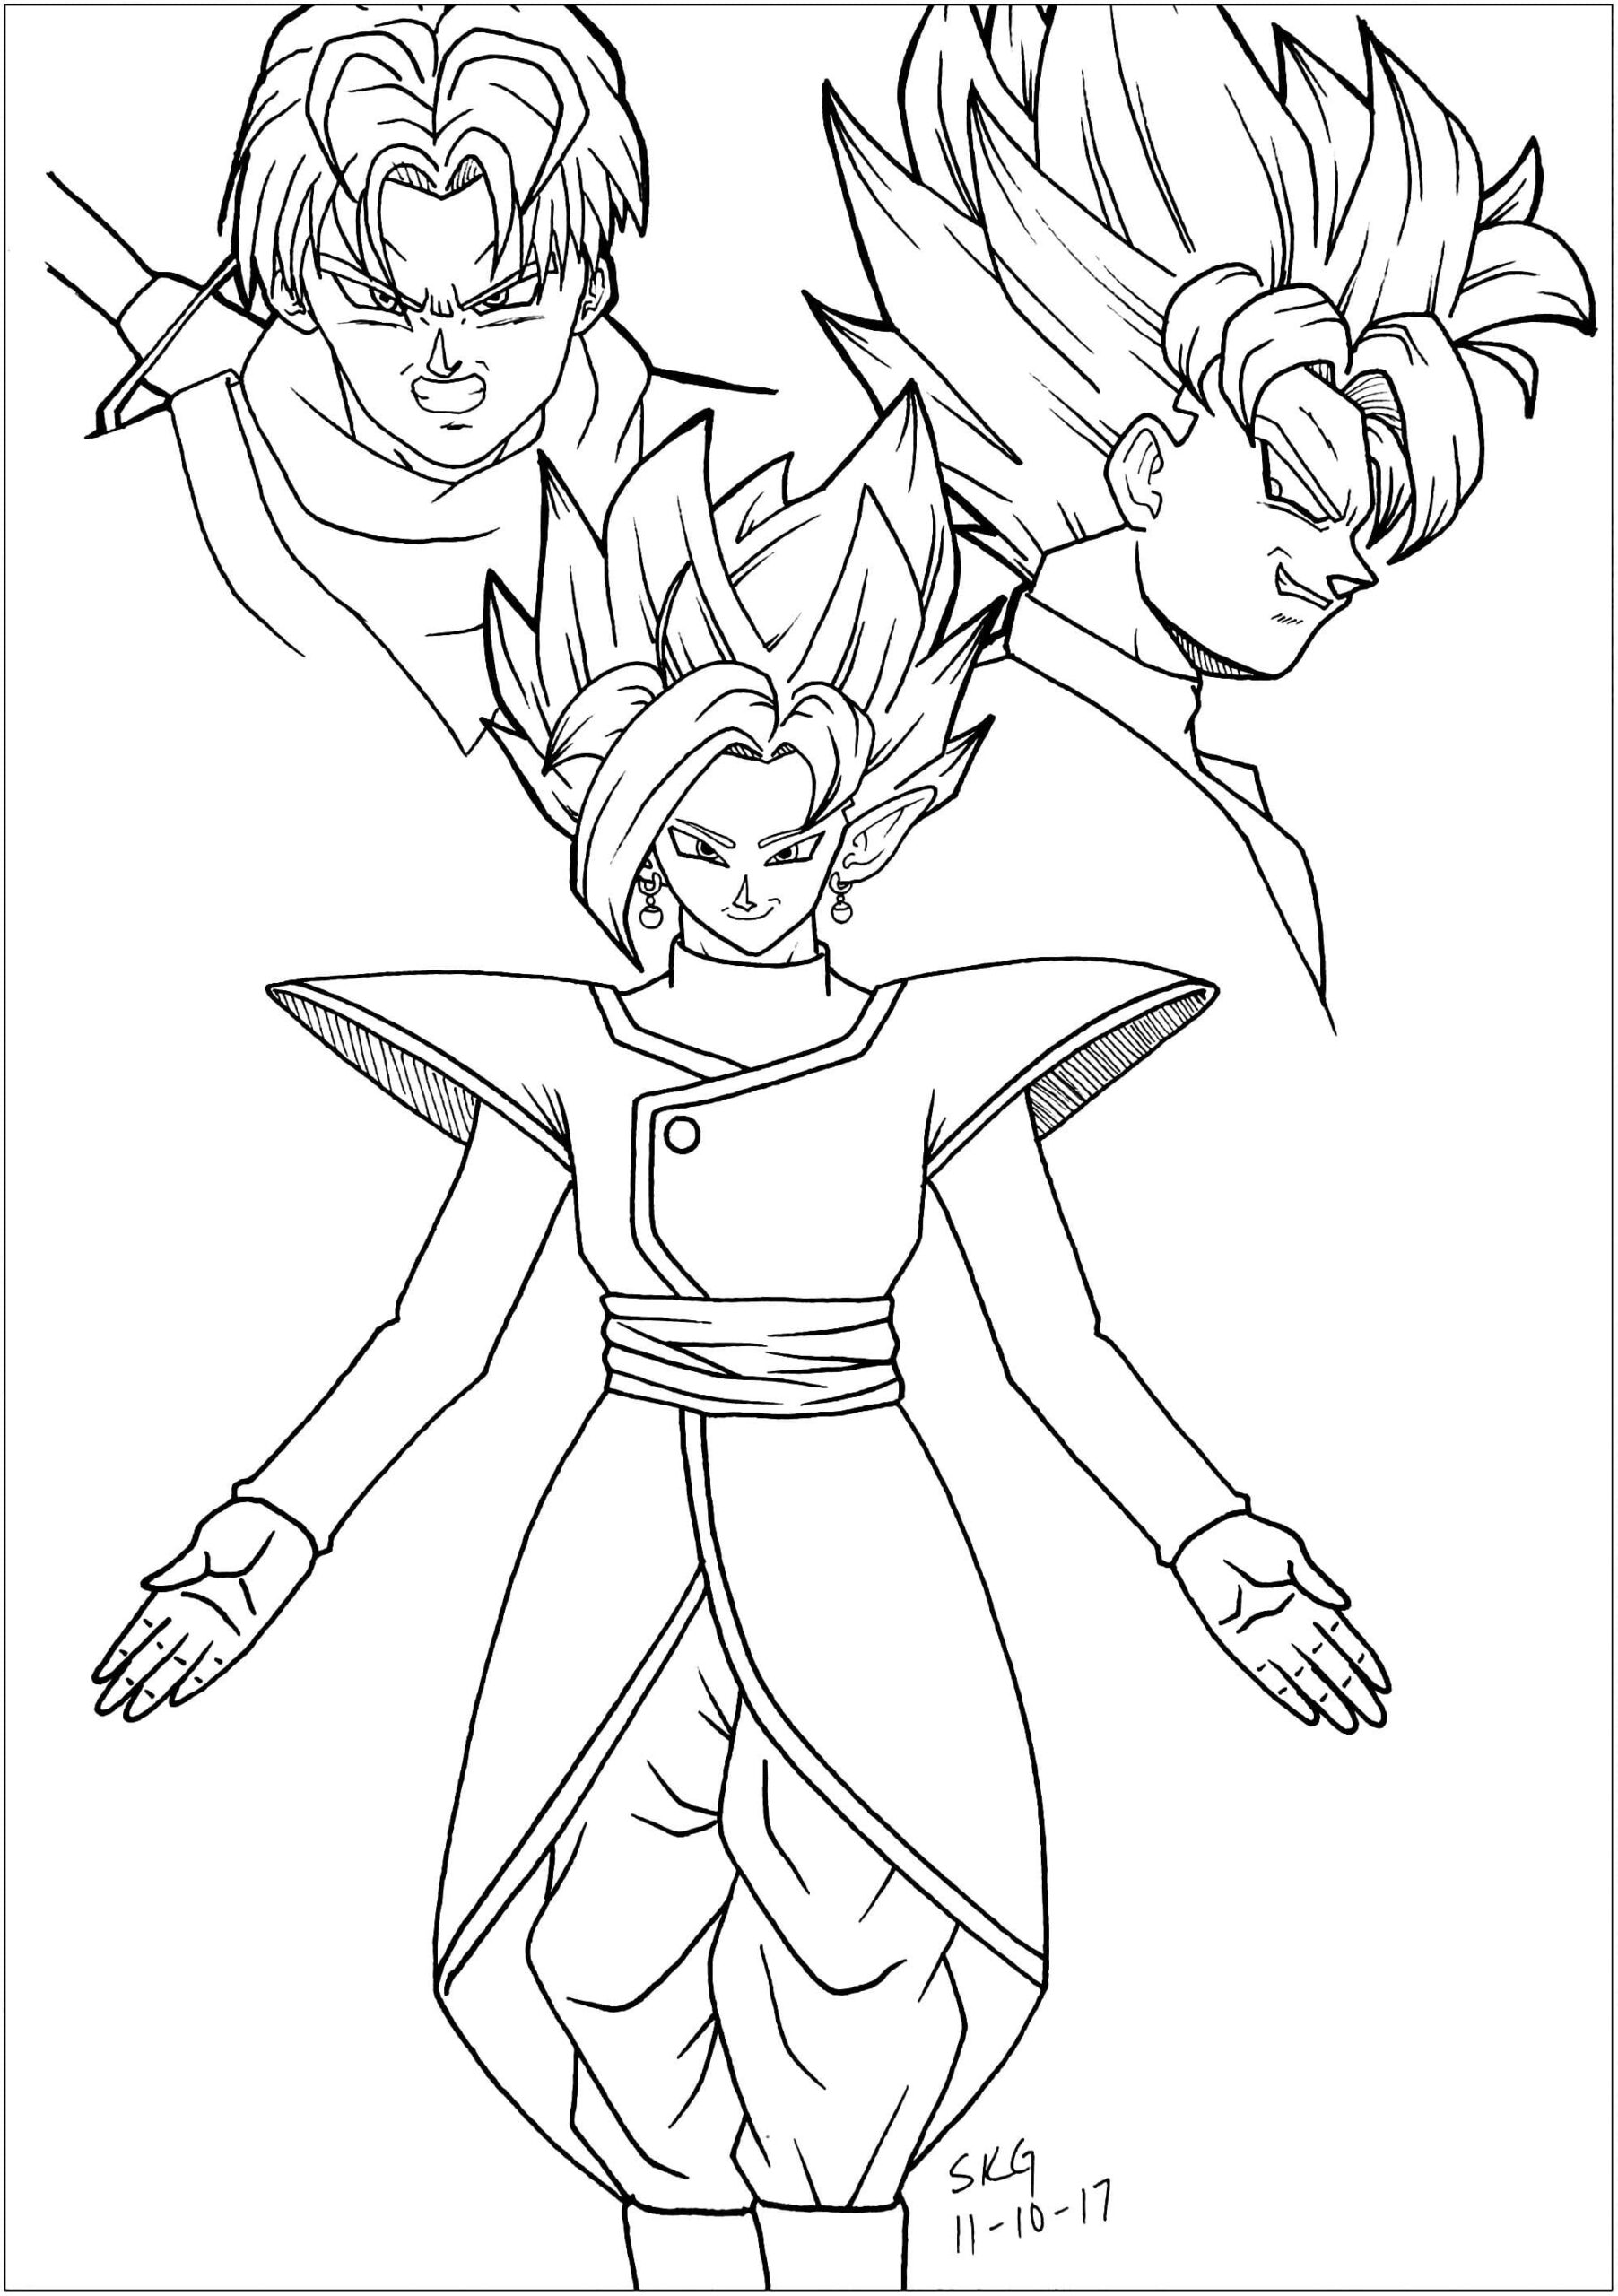 Trunks, Black Goku and Zamasu